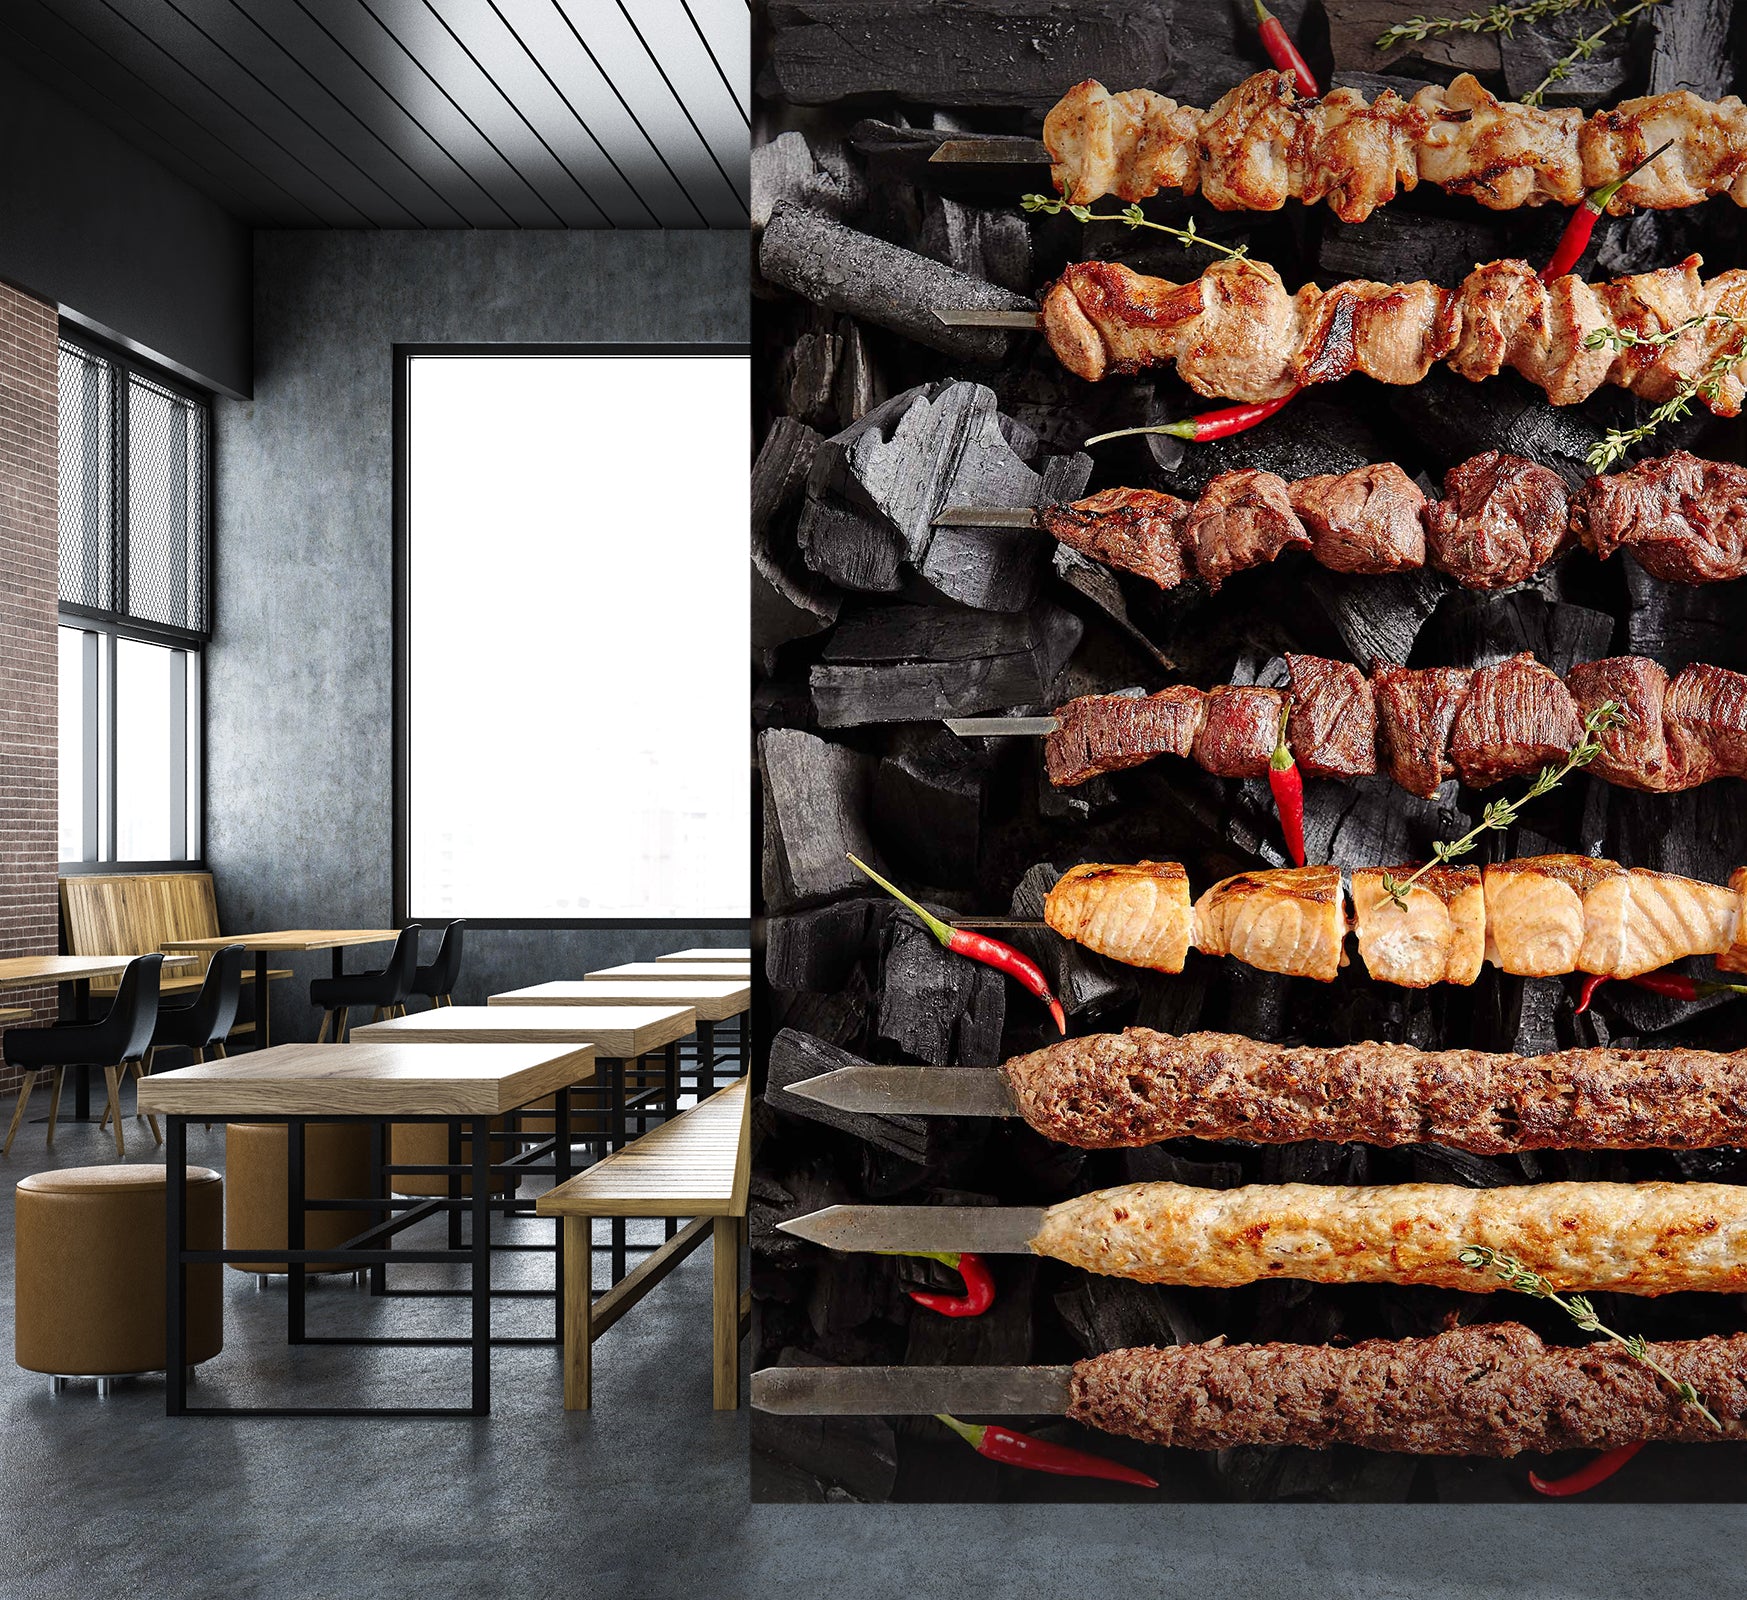 3D Grill Kebab Shop BBQ 362 Wall Mural Wall Murals Commercial